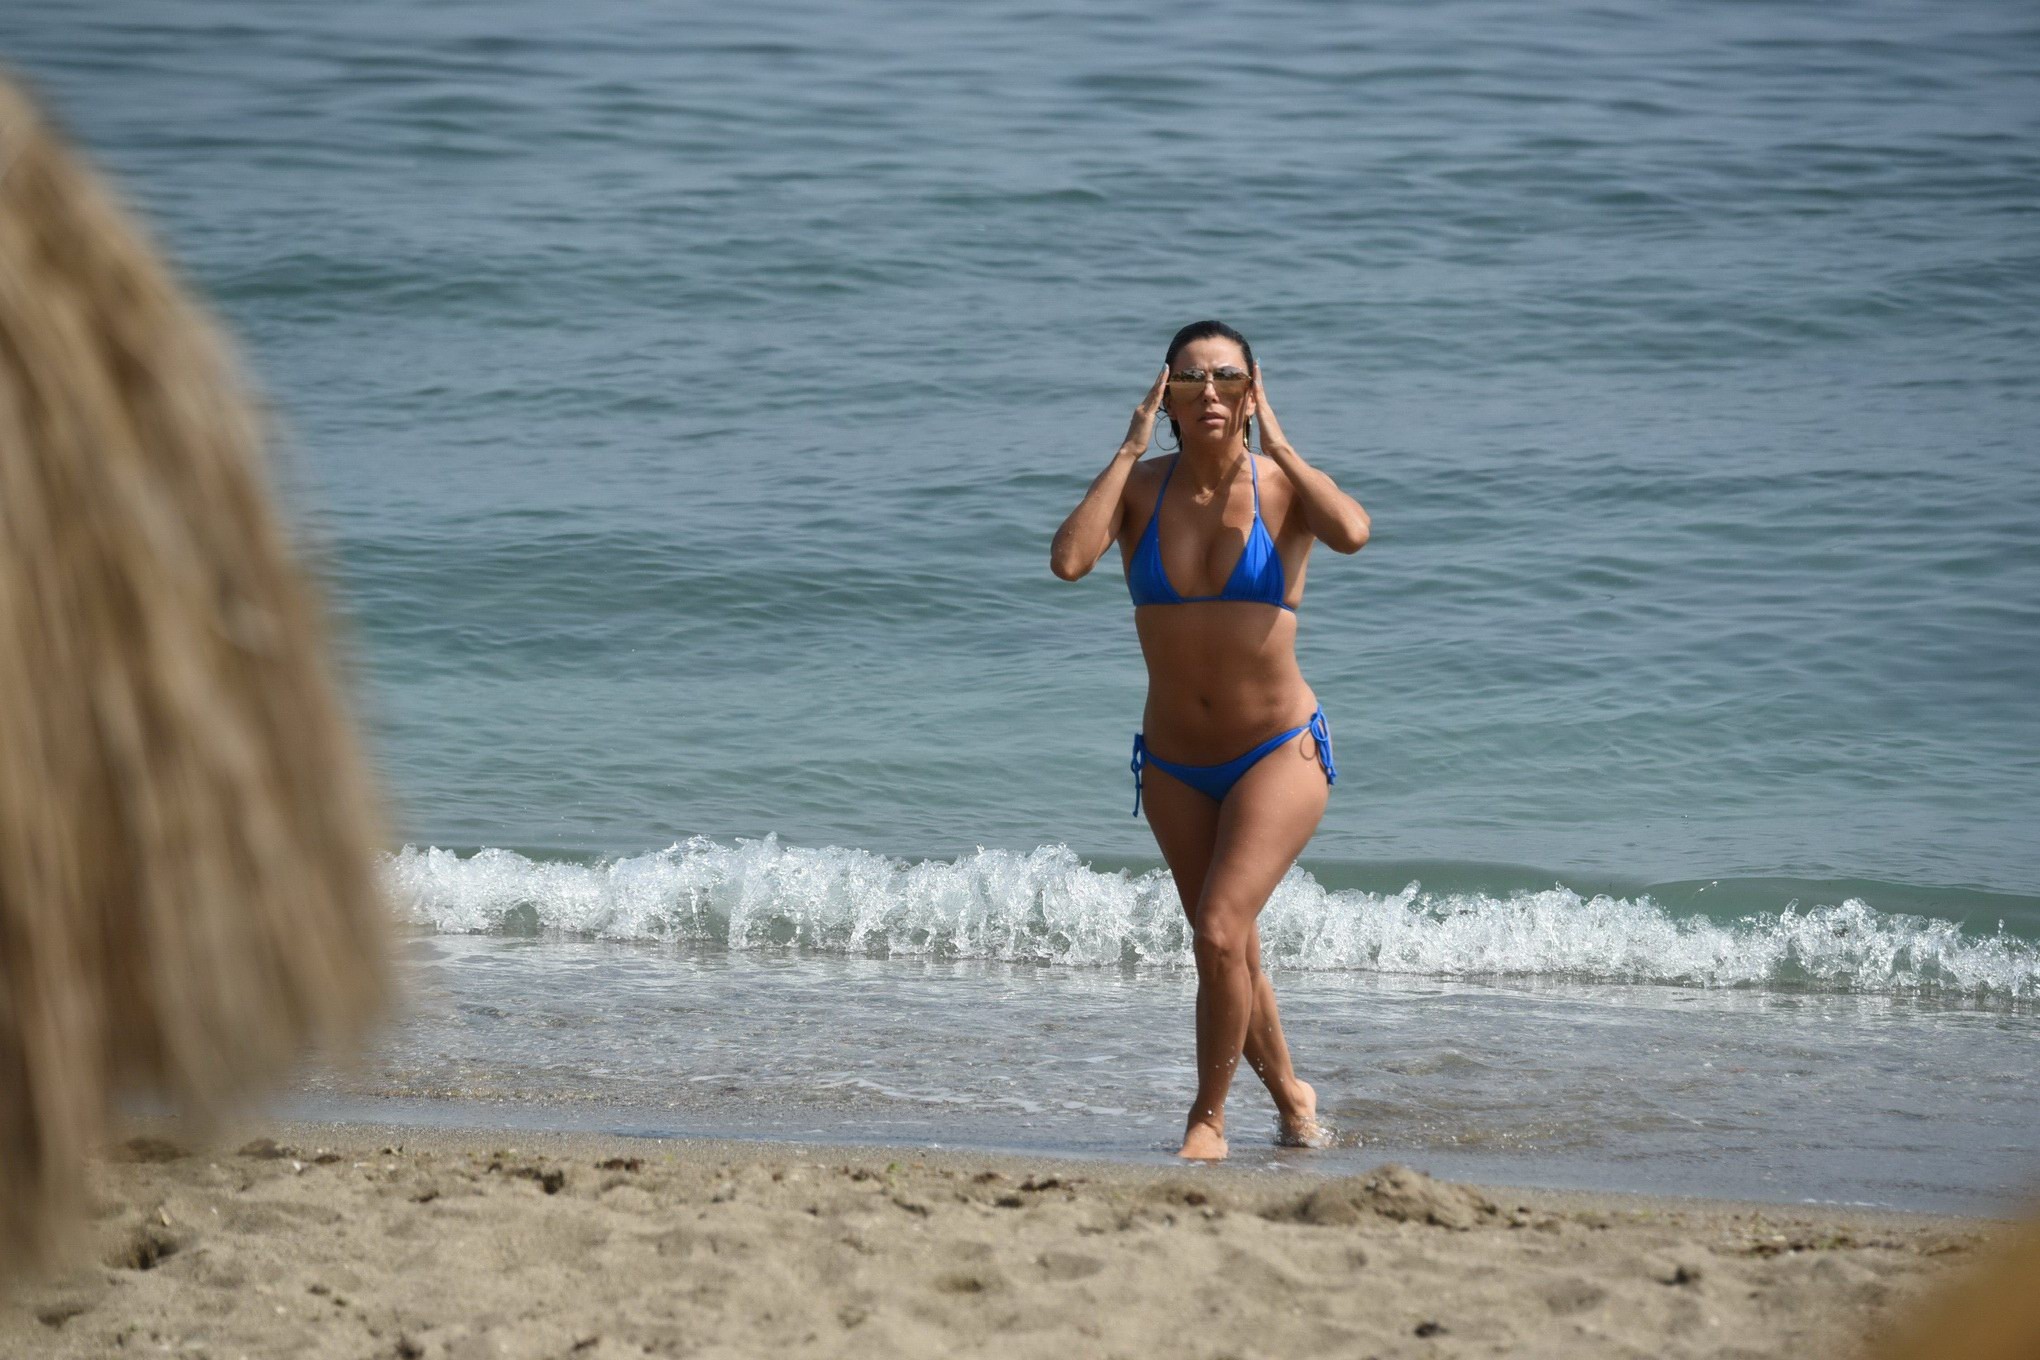 Eva longoria superbe dans un minuscule bikini bleu sur une plage
 #75159508